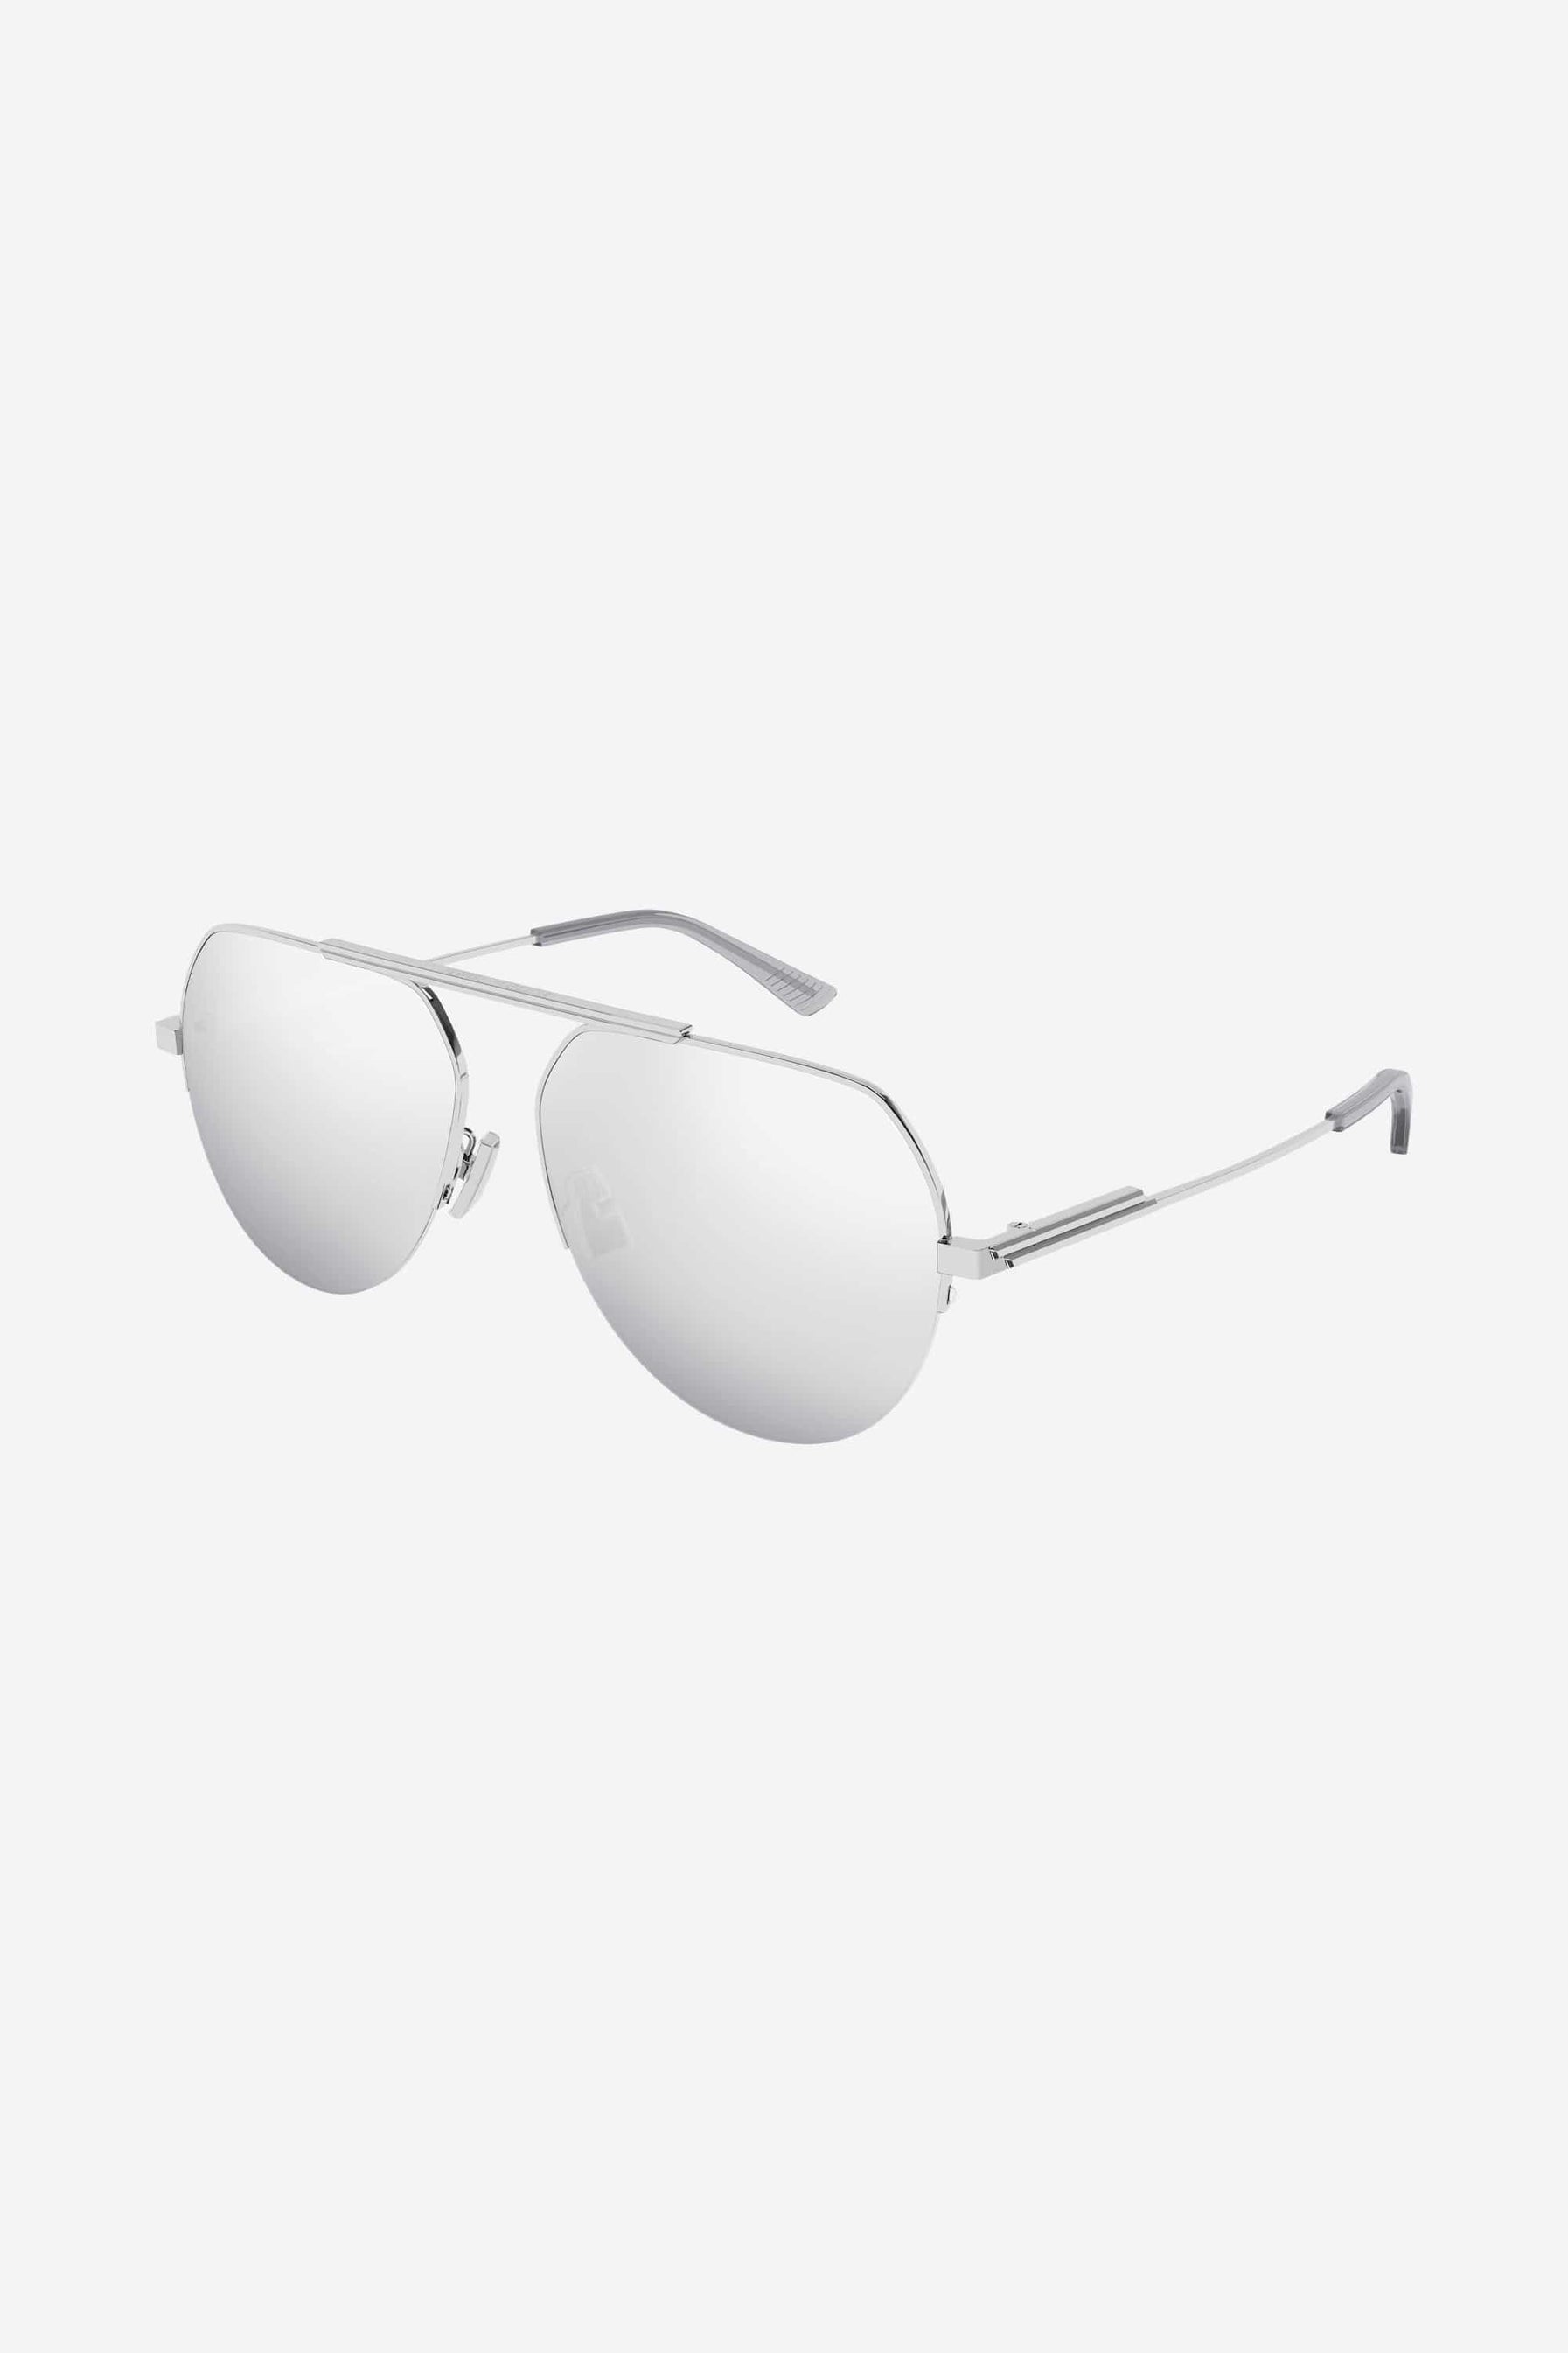 Bottega Veneta silver pilot style sunglasses - Eyewear Club